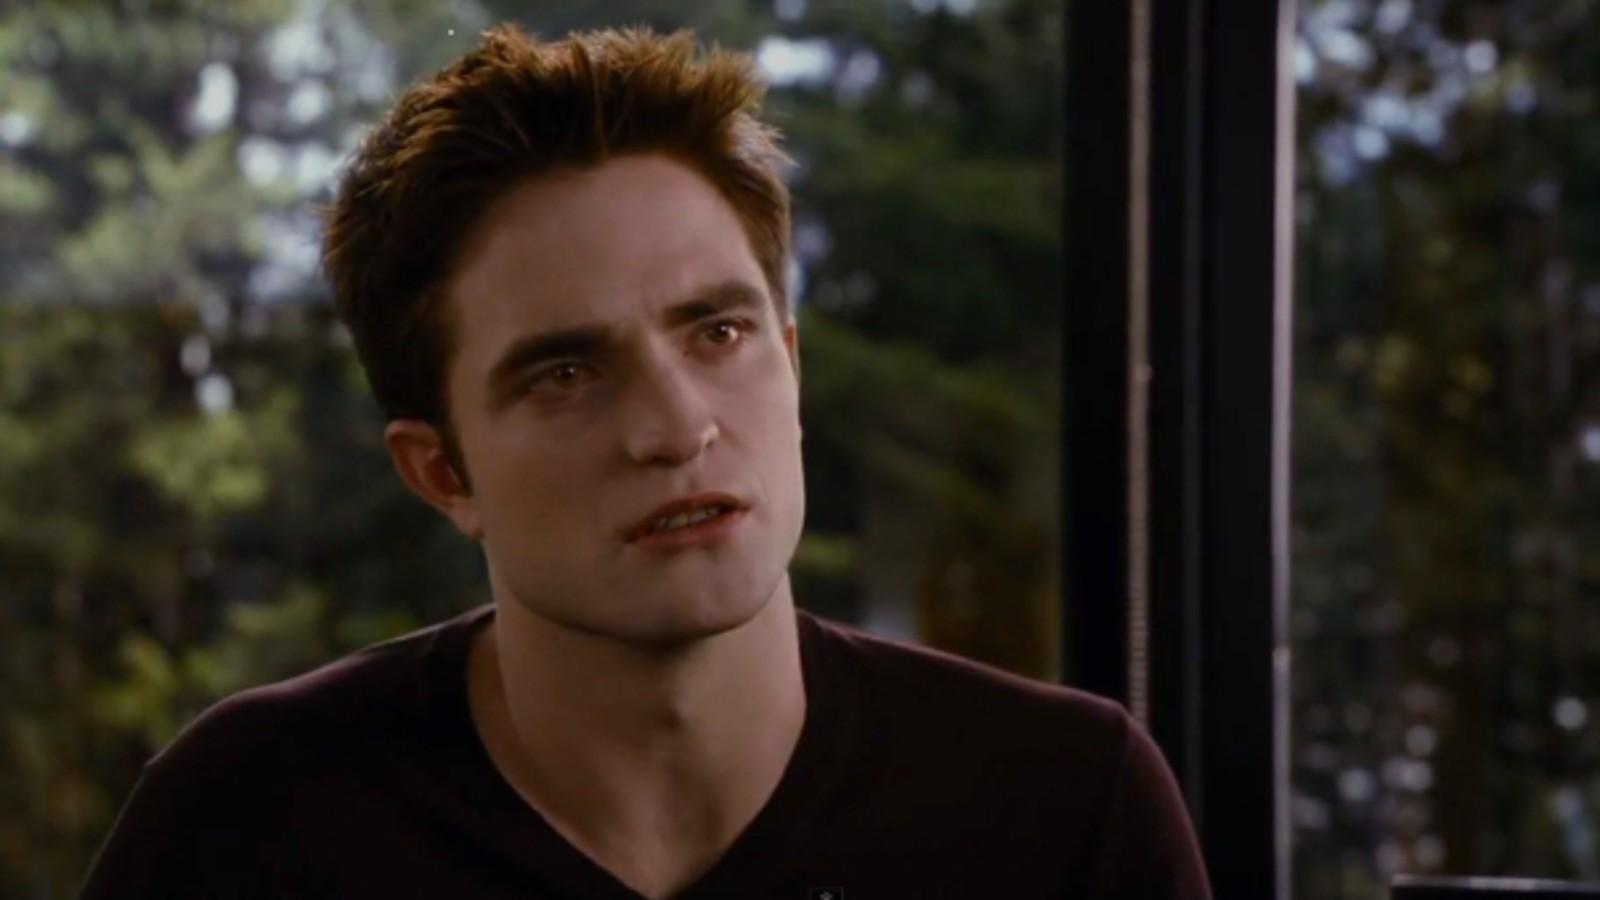 Robert Pattinson as Edward Cullen in The Twilight Saga